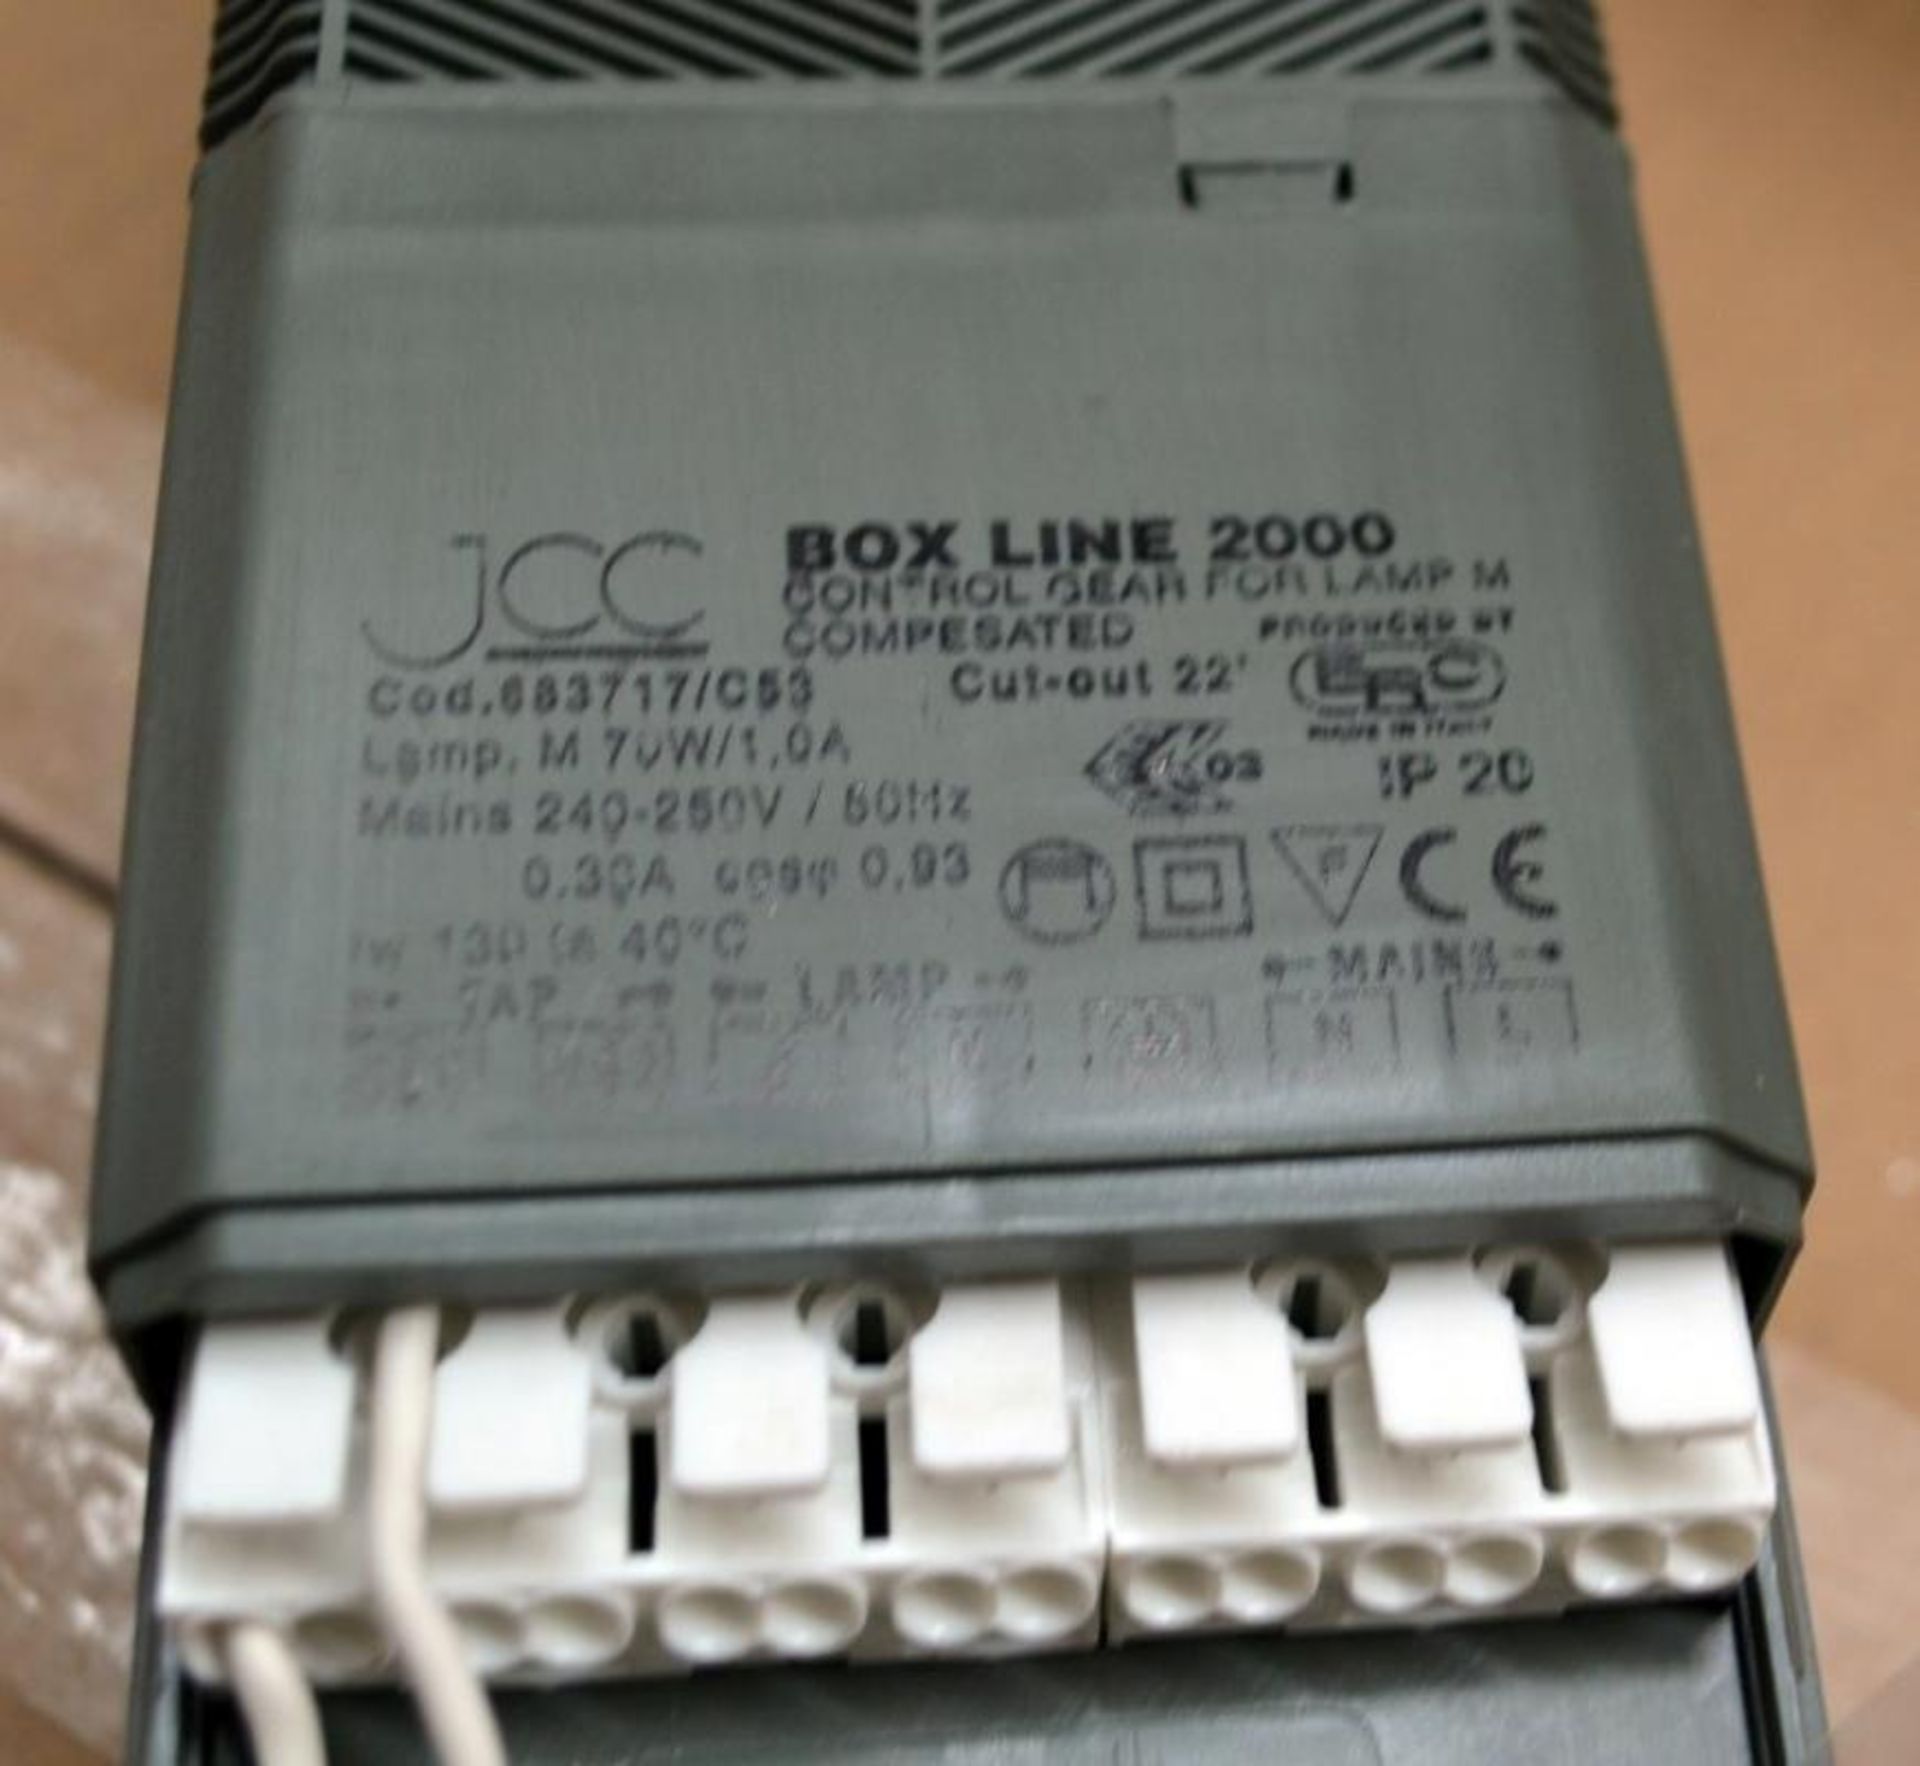 5 x JCC Lighting JC16002 Remote Gearboxes - Box Line 2000 - 240V-250V/ 50HZ HQI - New/Unused Stock - - Image 2 of 5